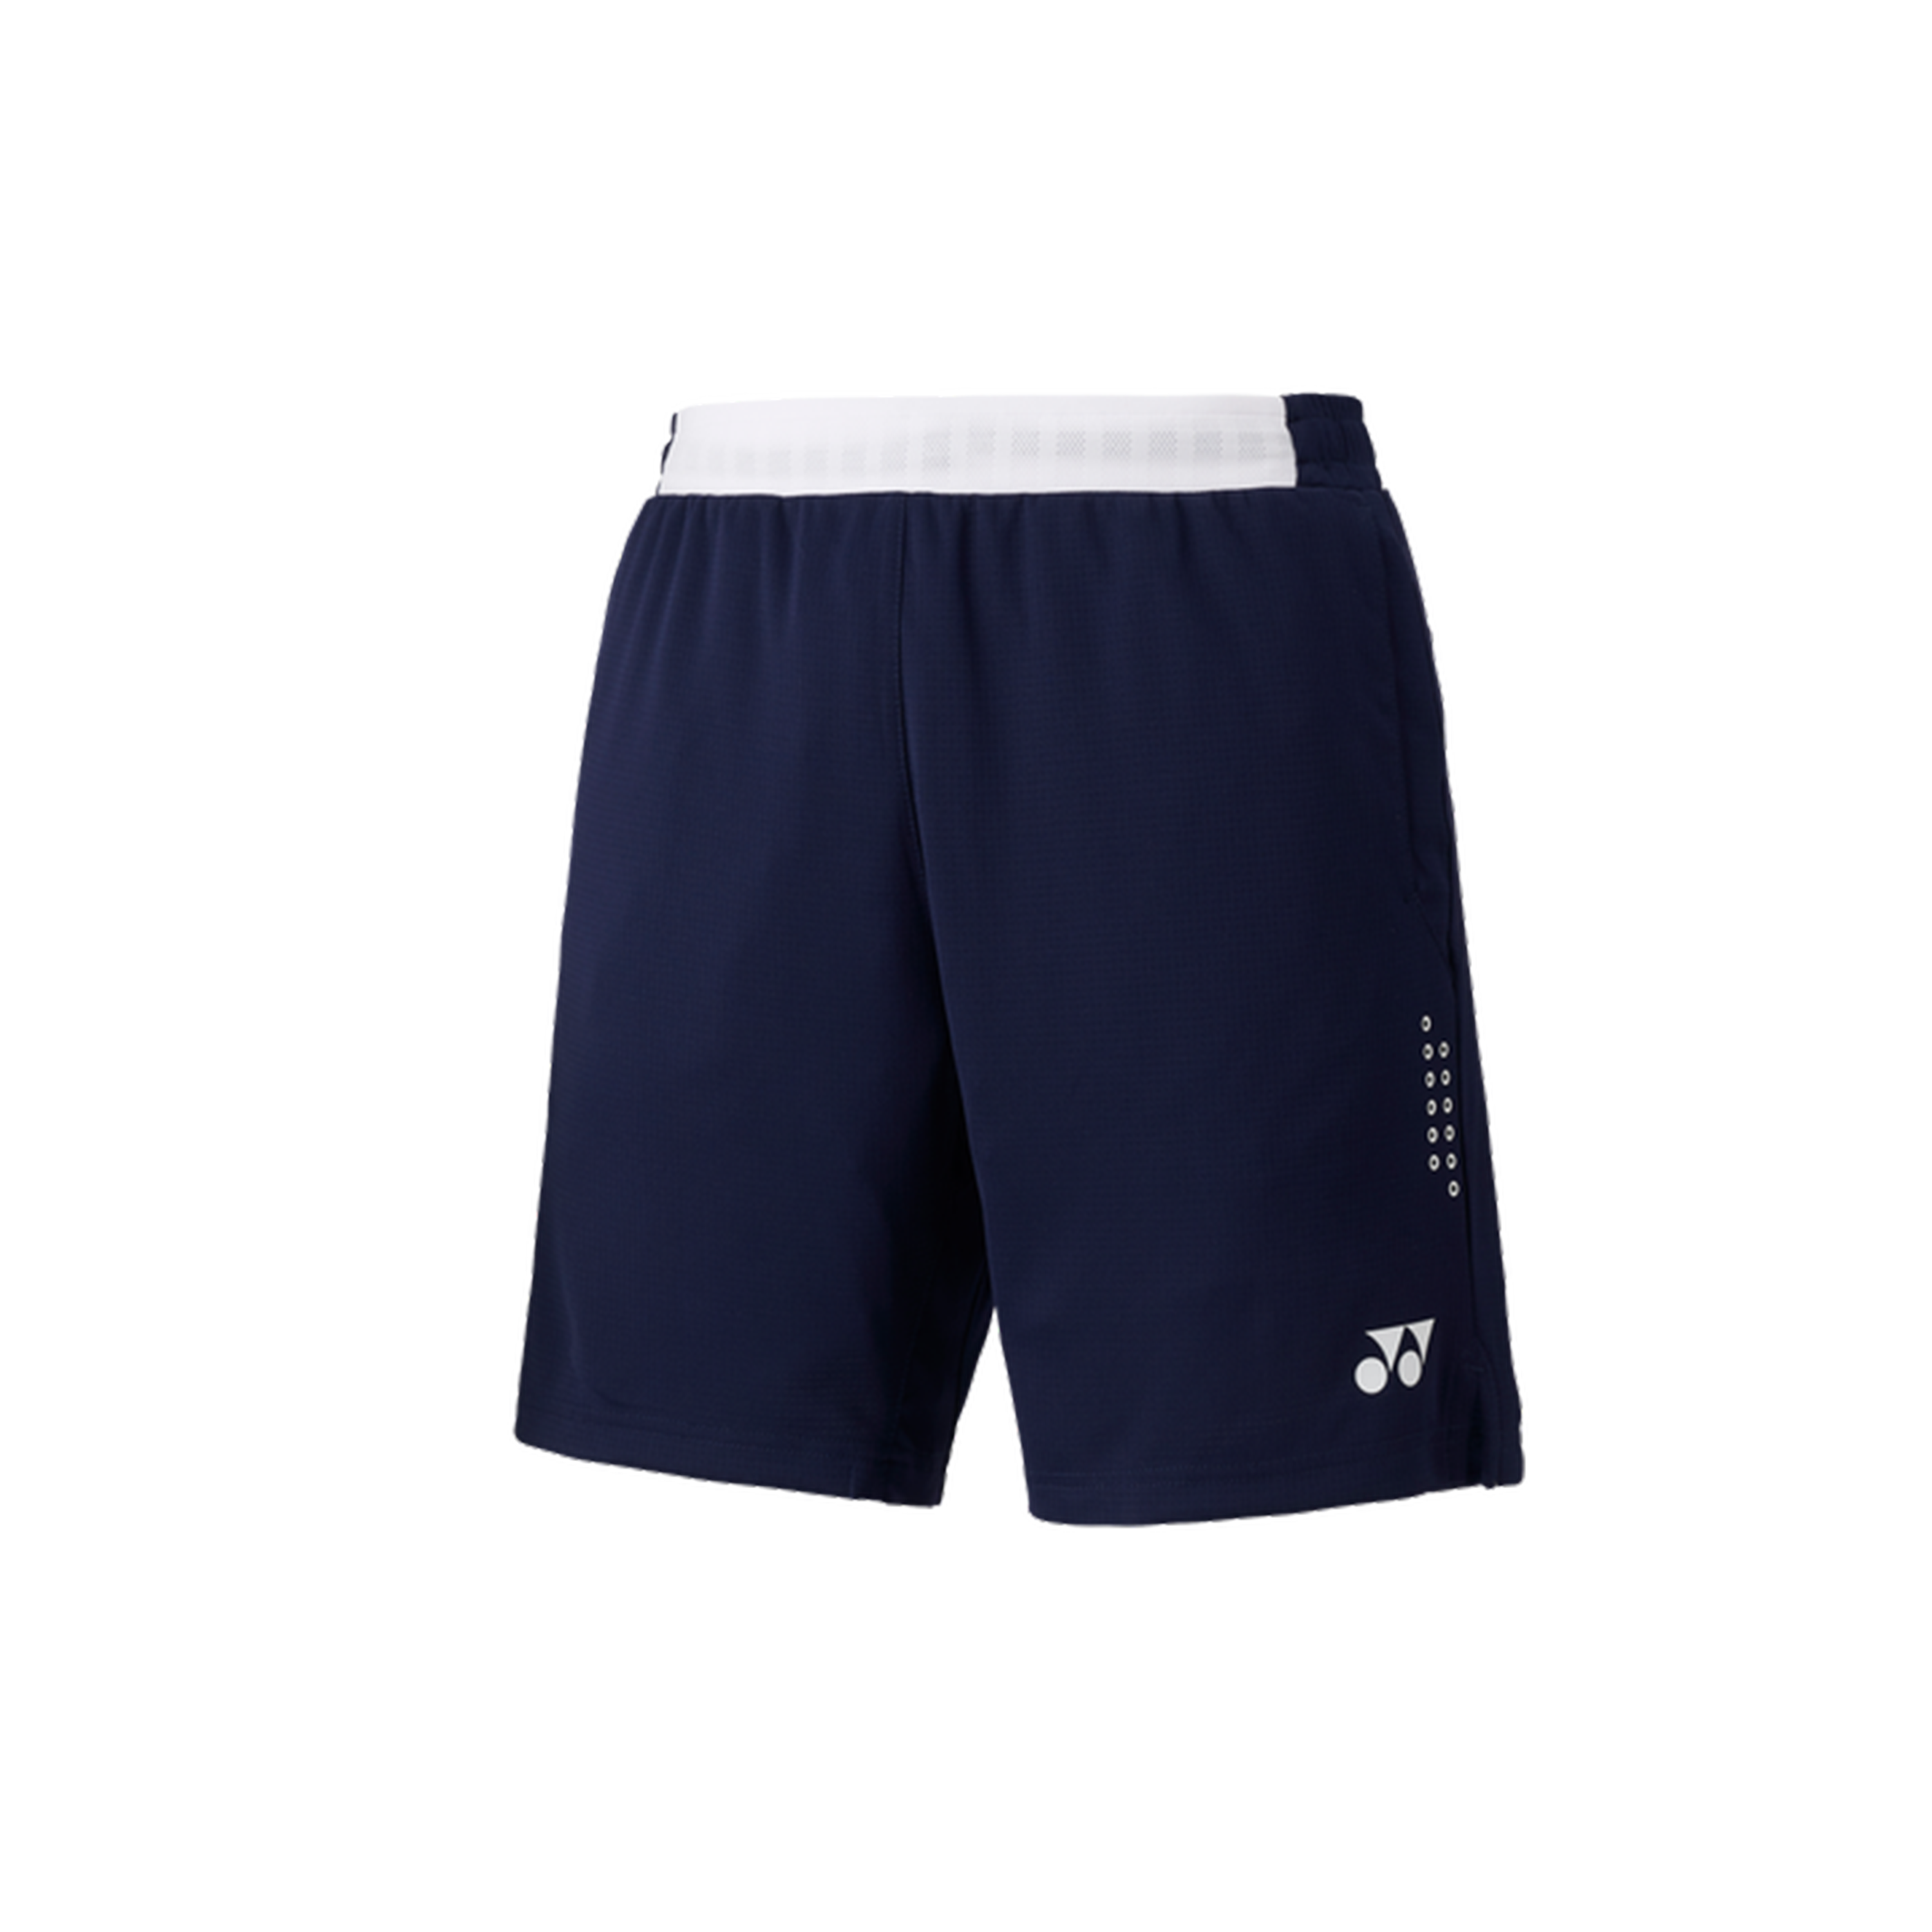 Yonex Premium Badminton/ Sports Shorts 15131 NavyBlue MEN'S